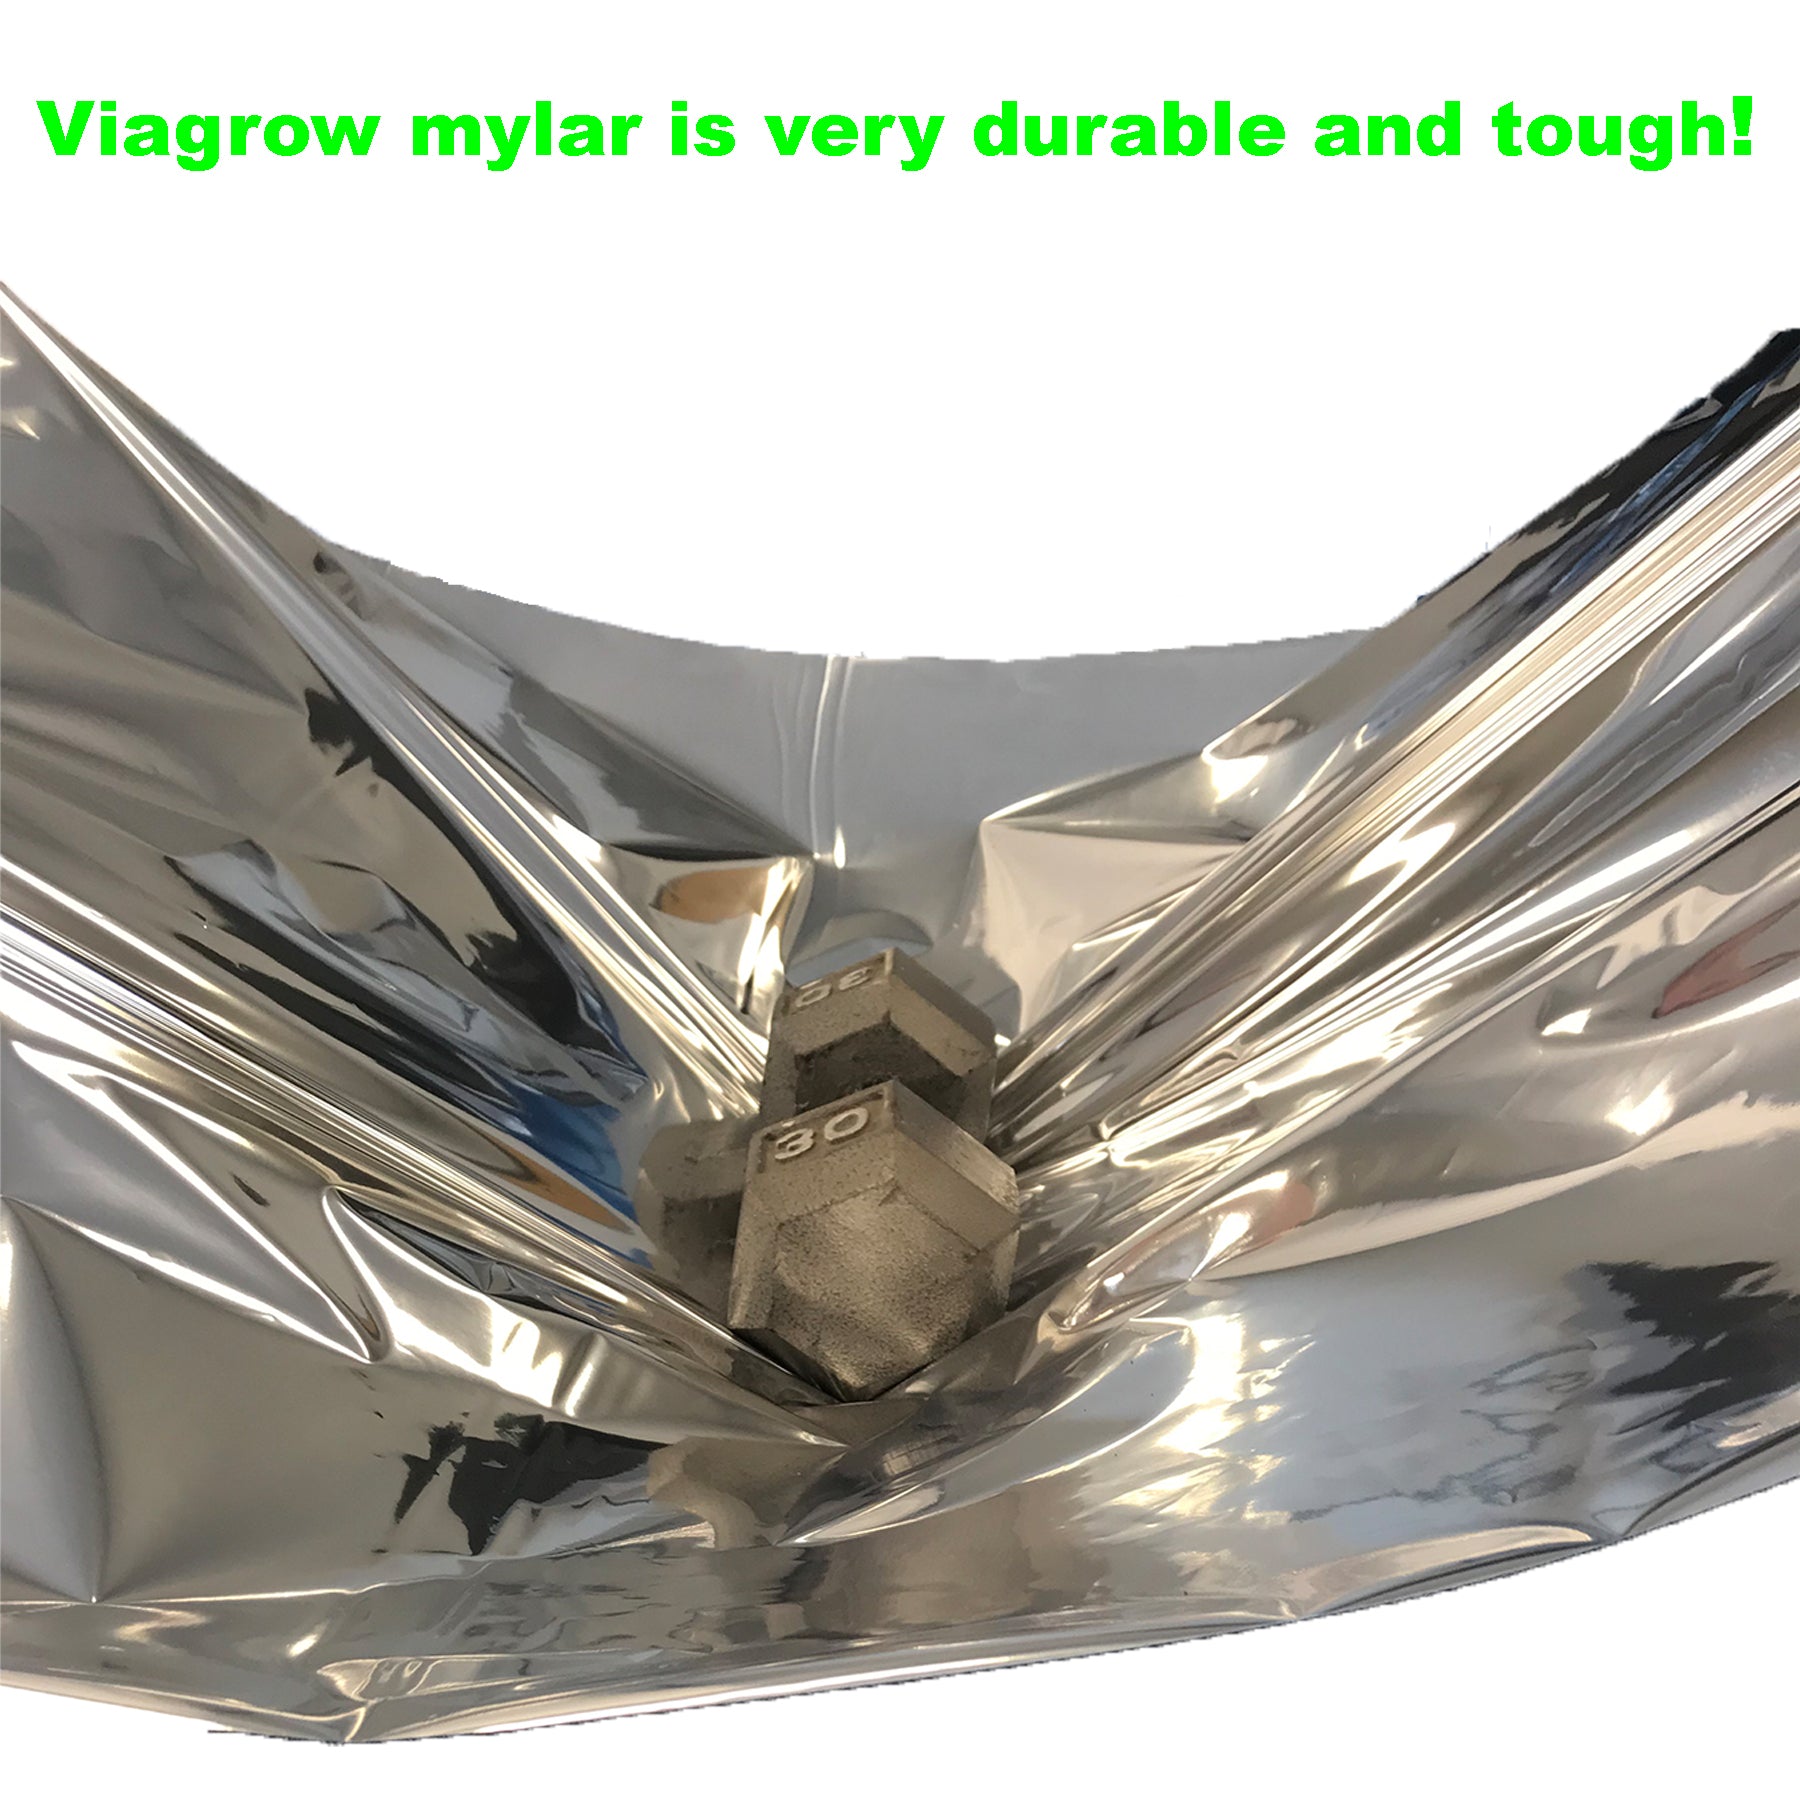 Viagrow Mylar Reflective Material, 50 feet, White/Silver